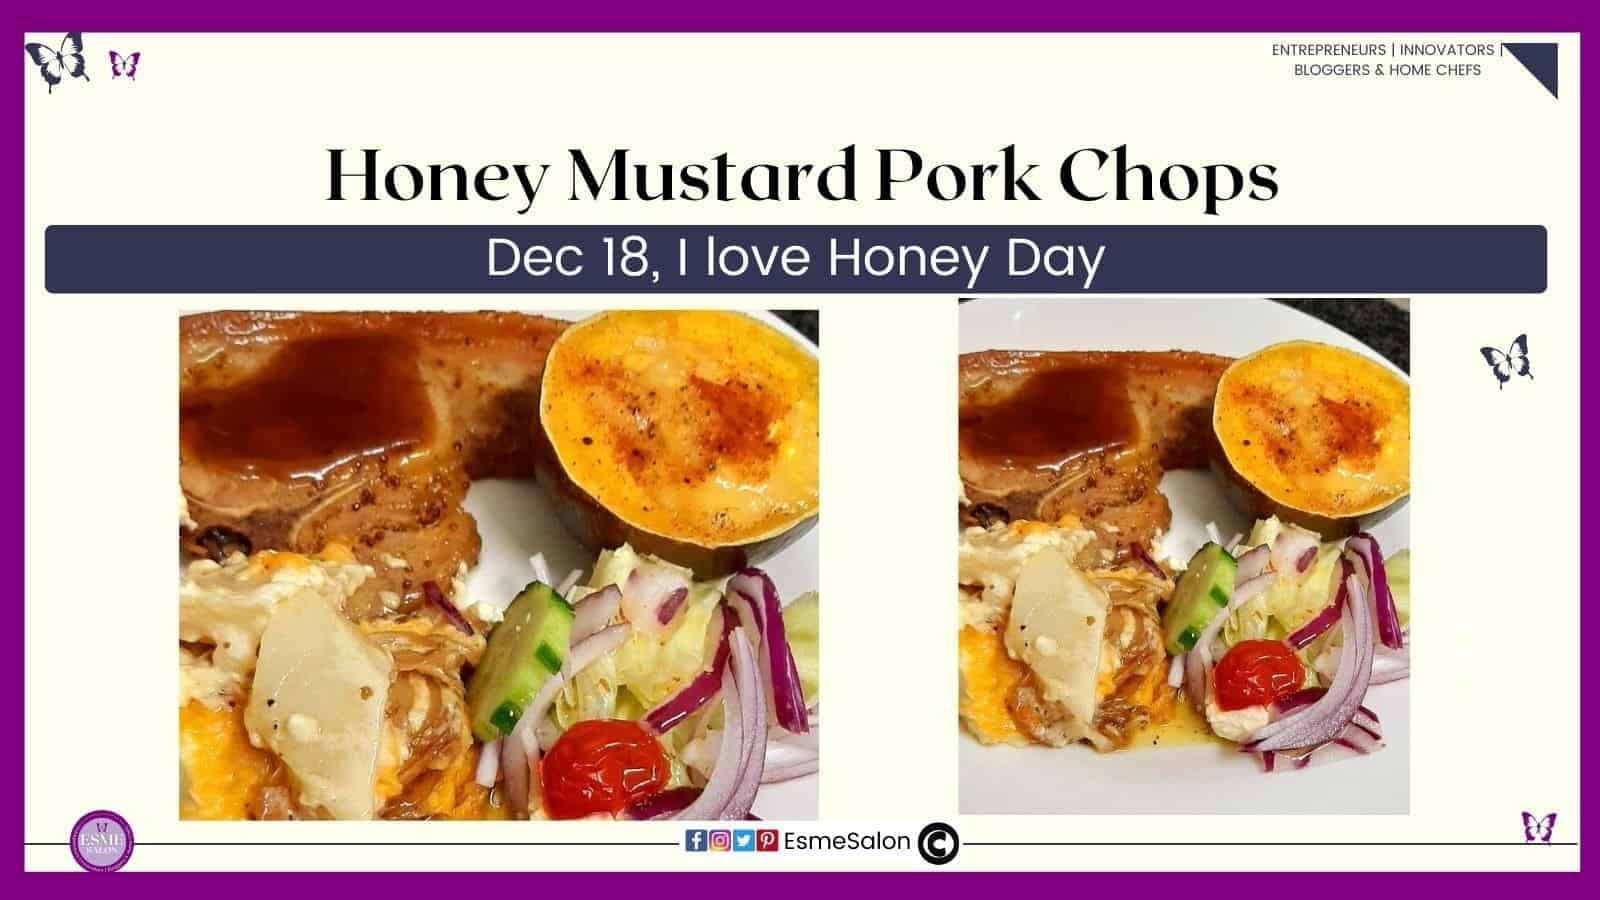 an image of Honey Mustard Pork Chops served with gem squash, potato and fresh salad